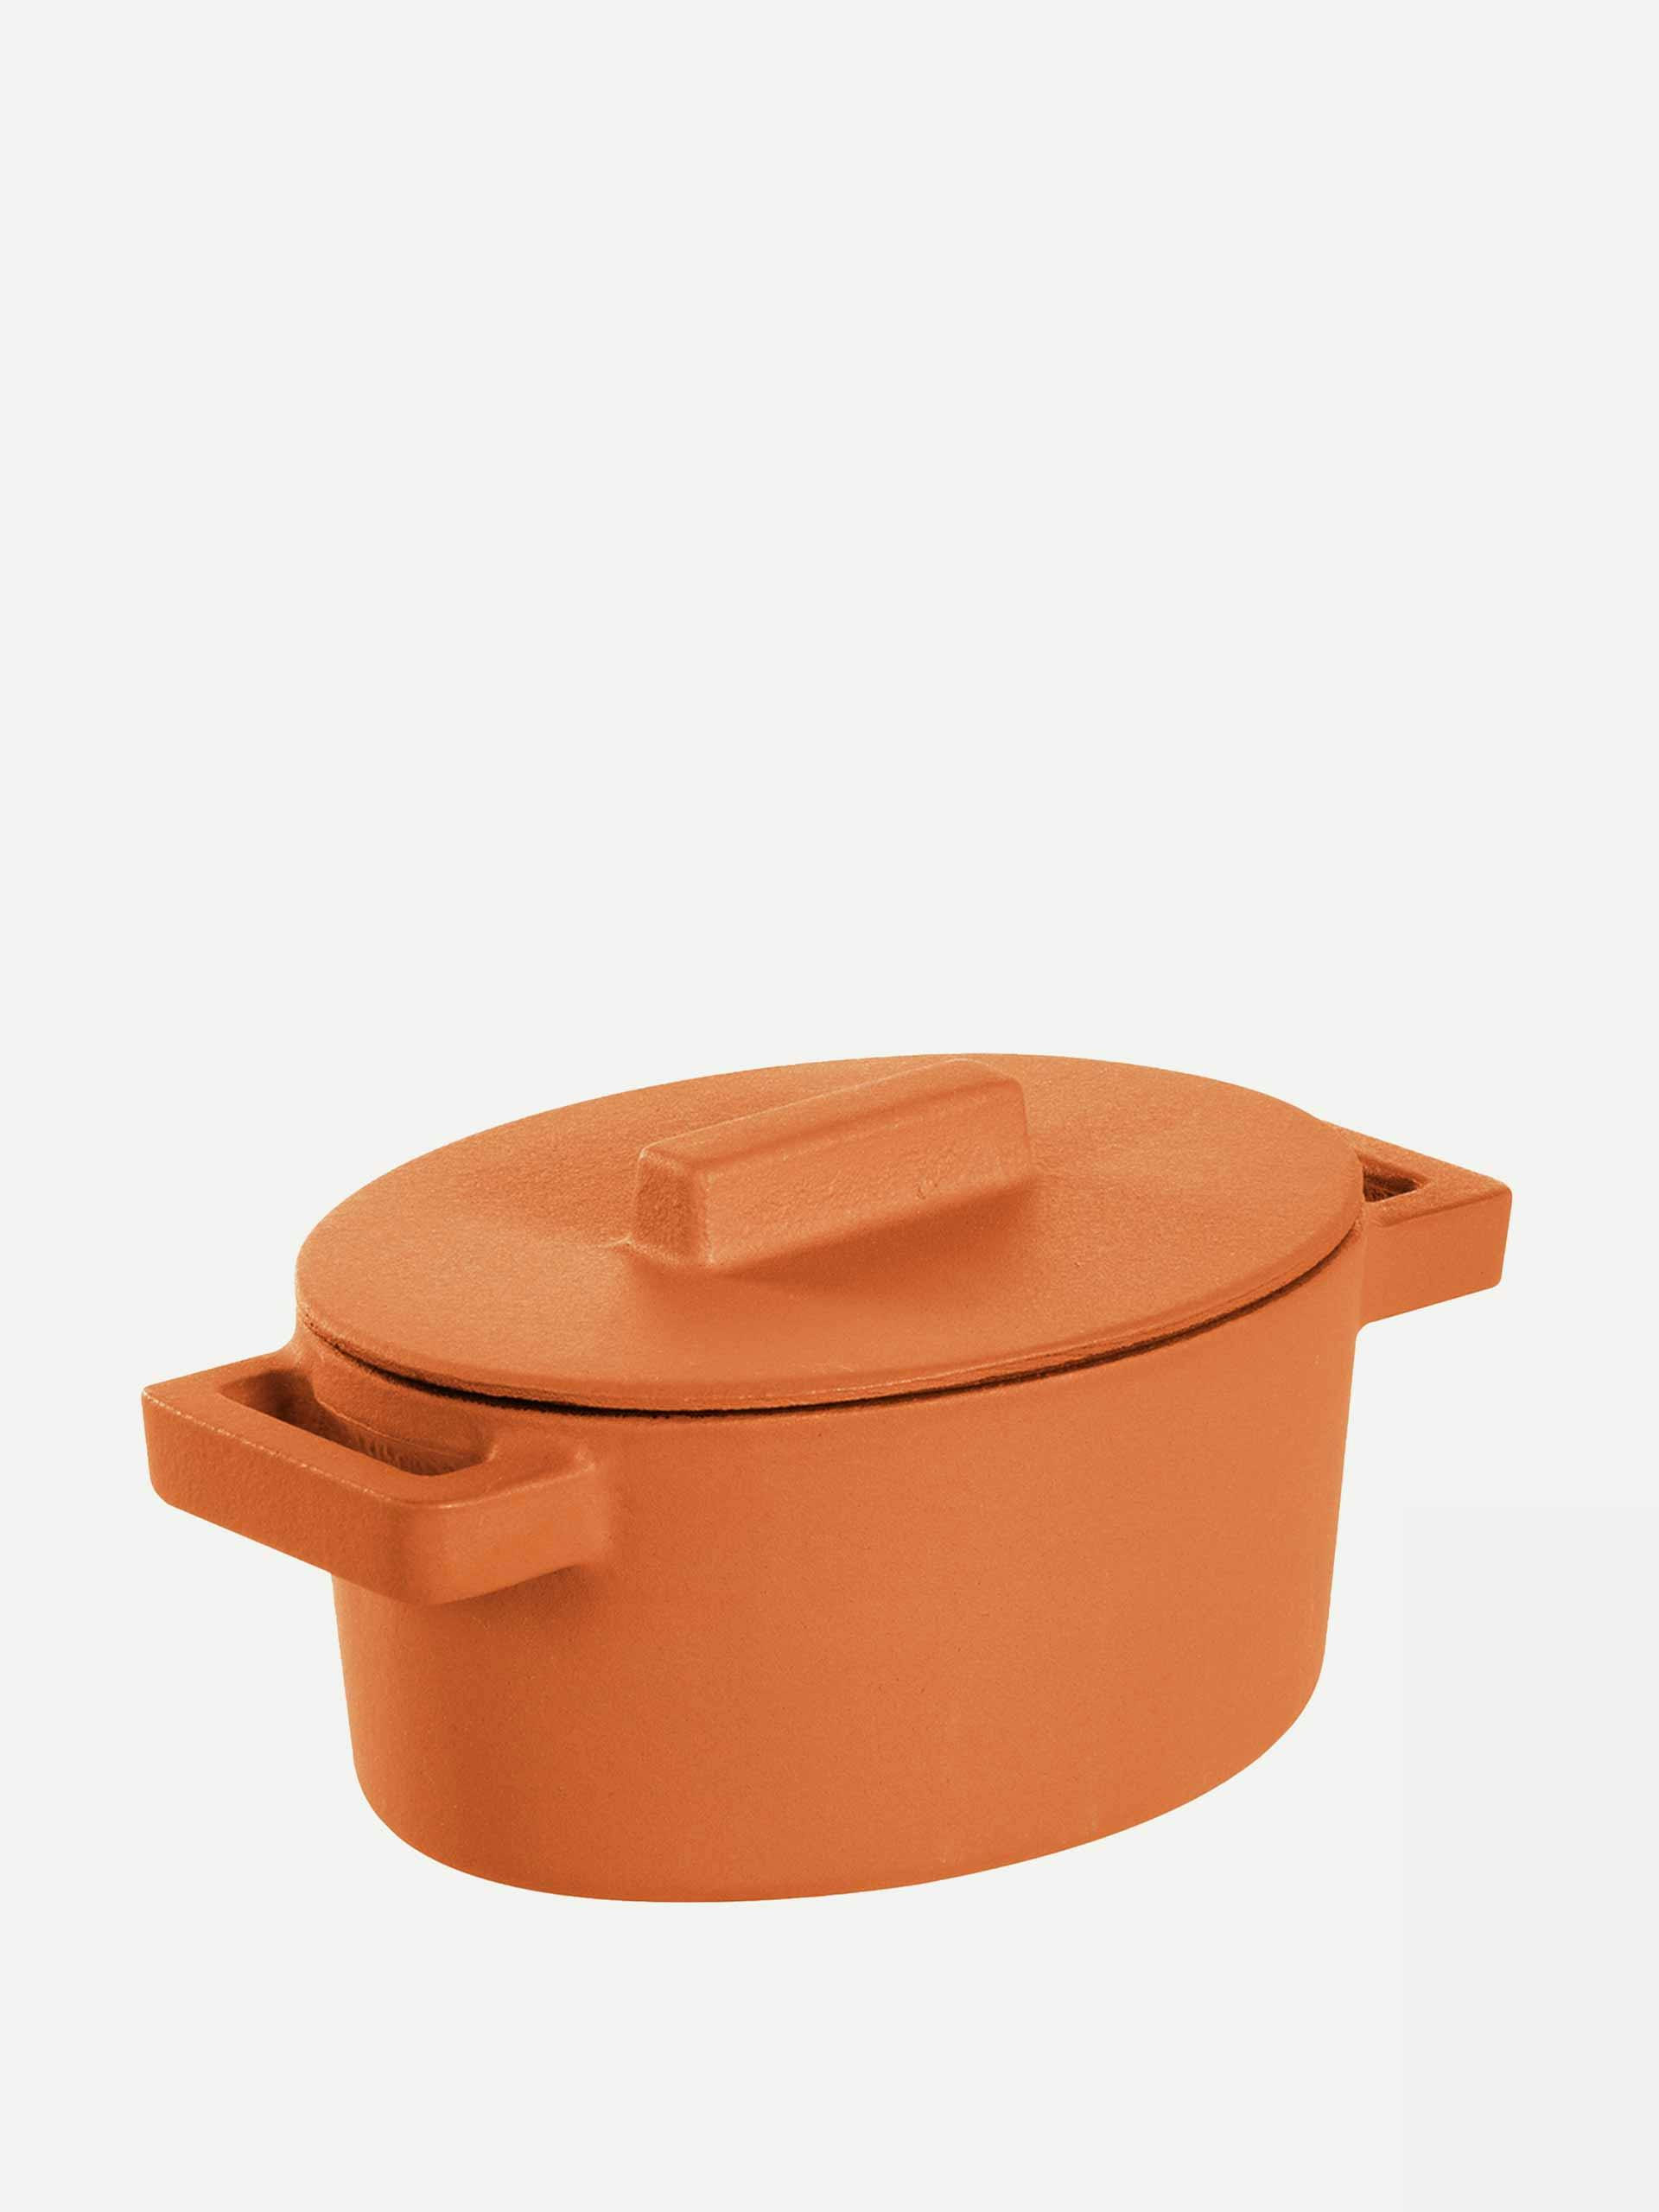 Cast iron casserole pot